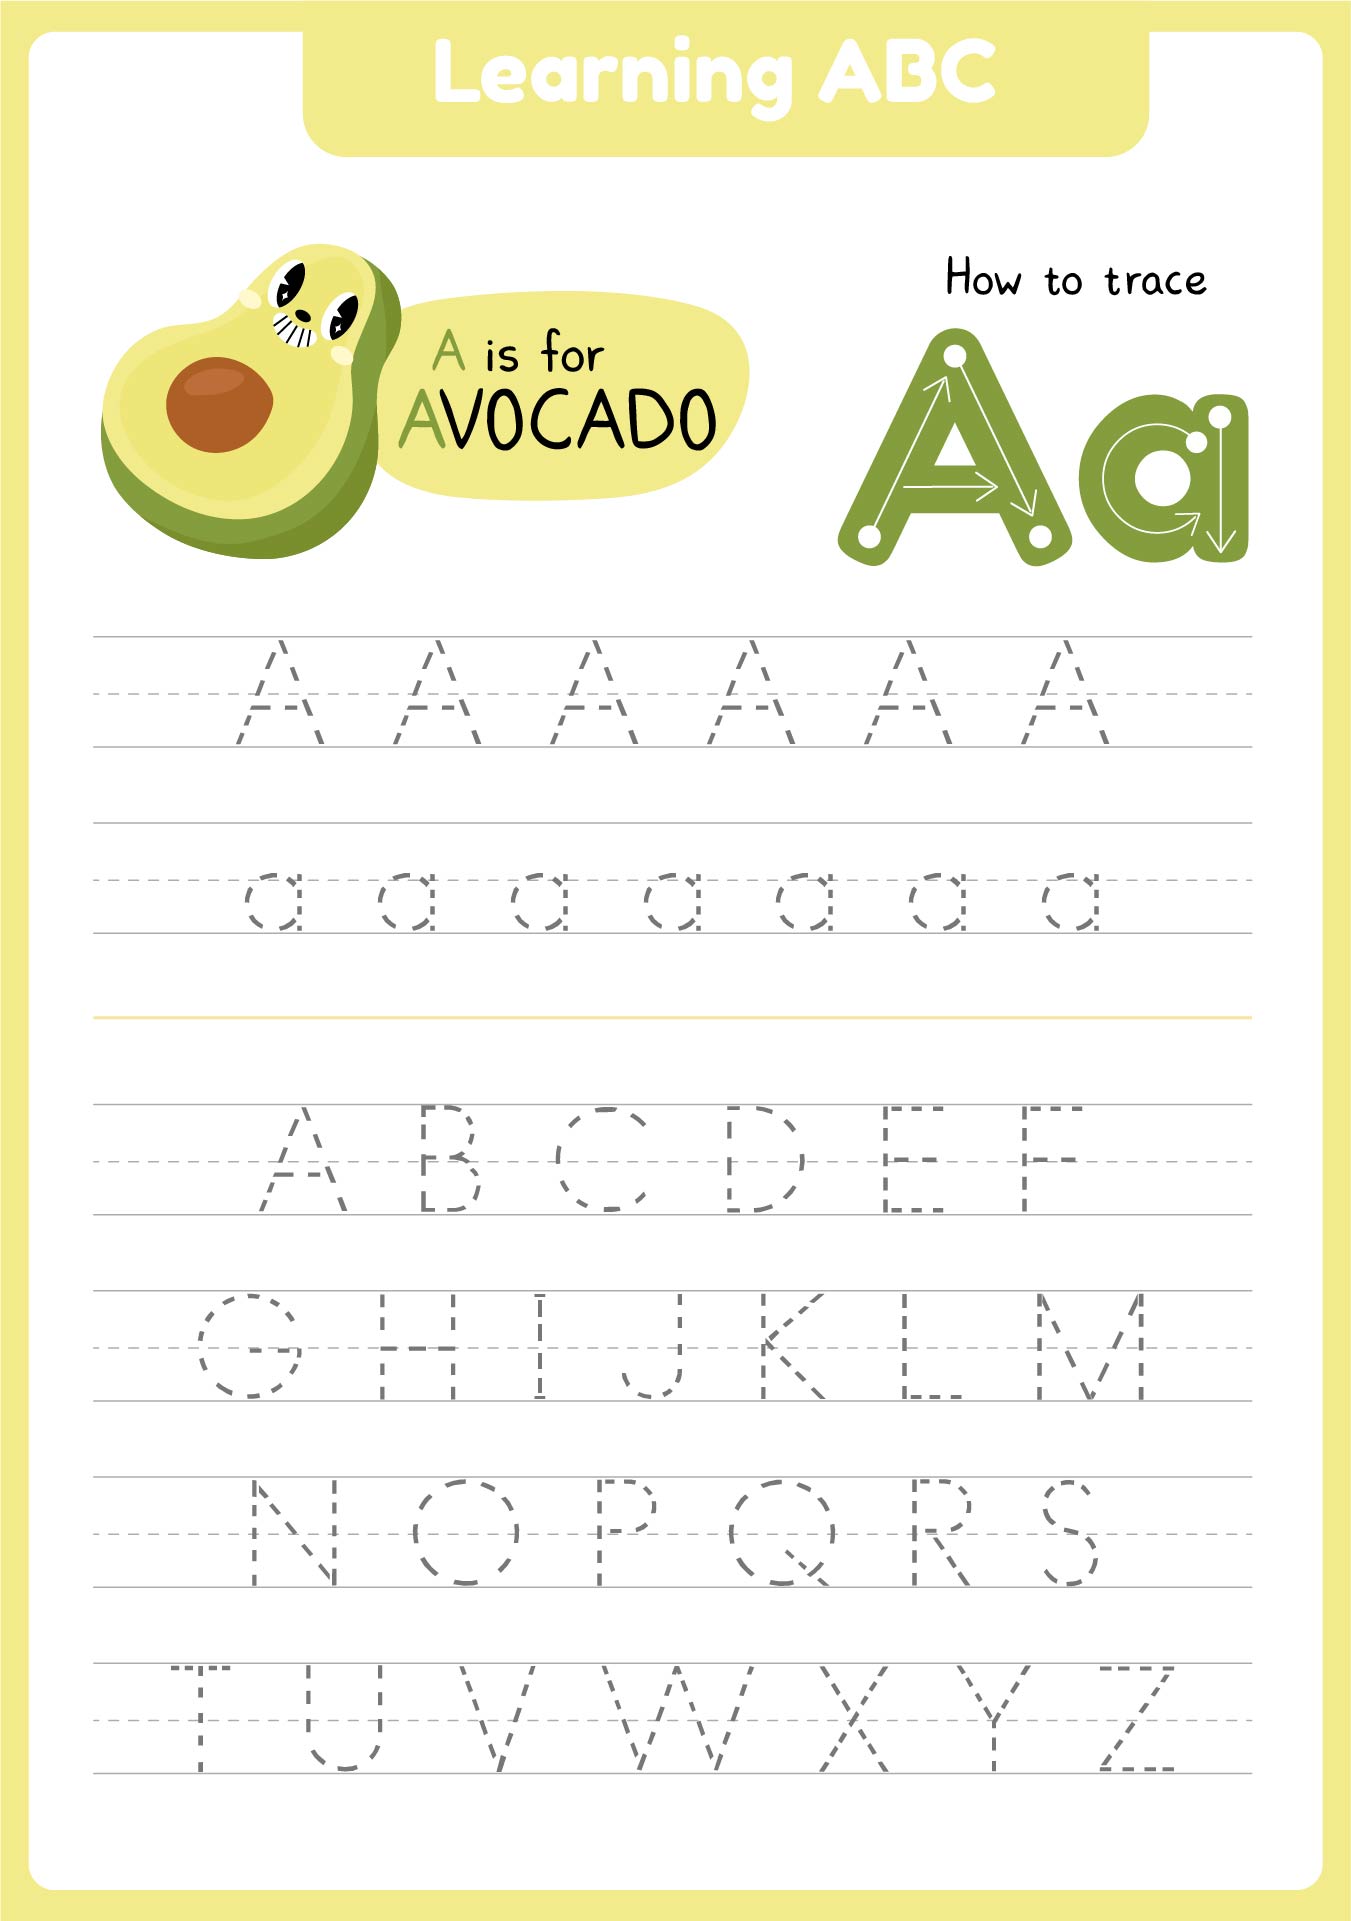 10 Best Free Printable Alphabet Tracing Letters - printablee.com